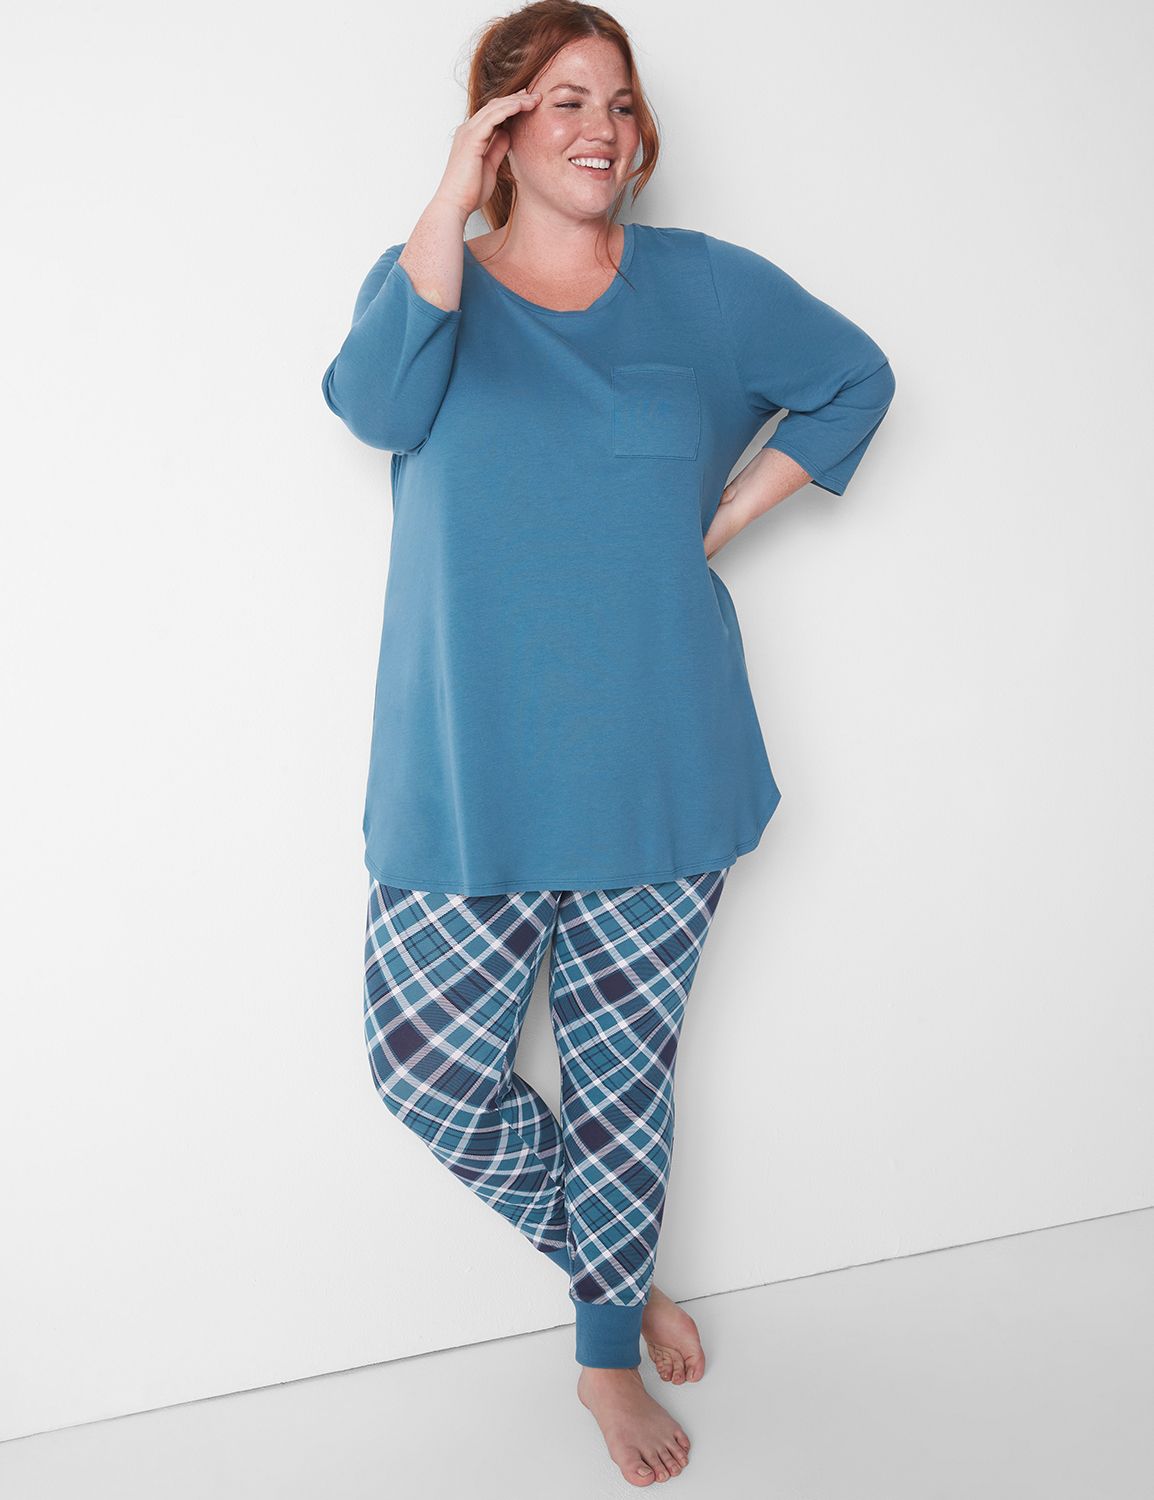 Legging Pyjamas, Shop The Largest Collection